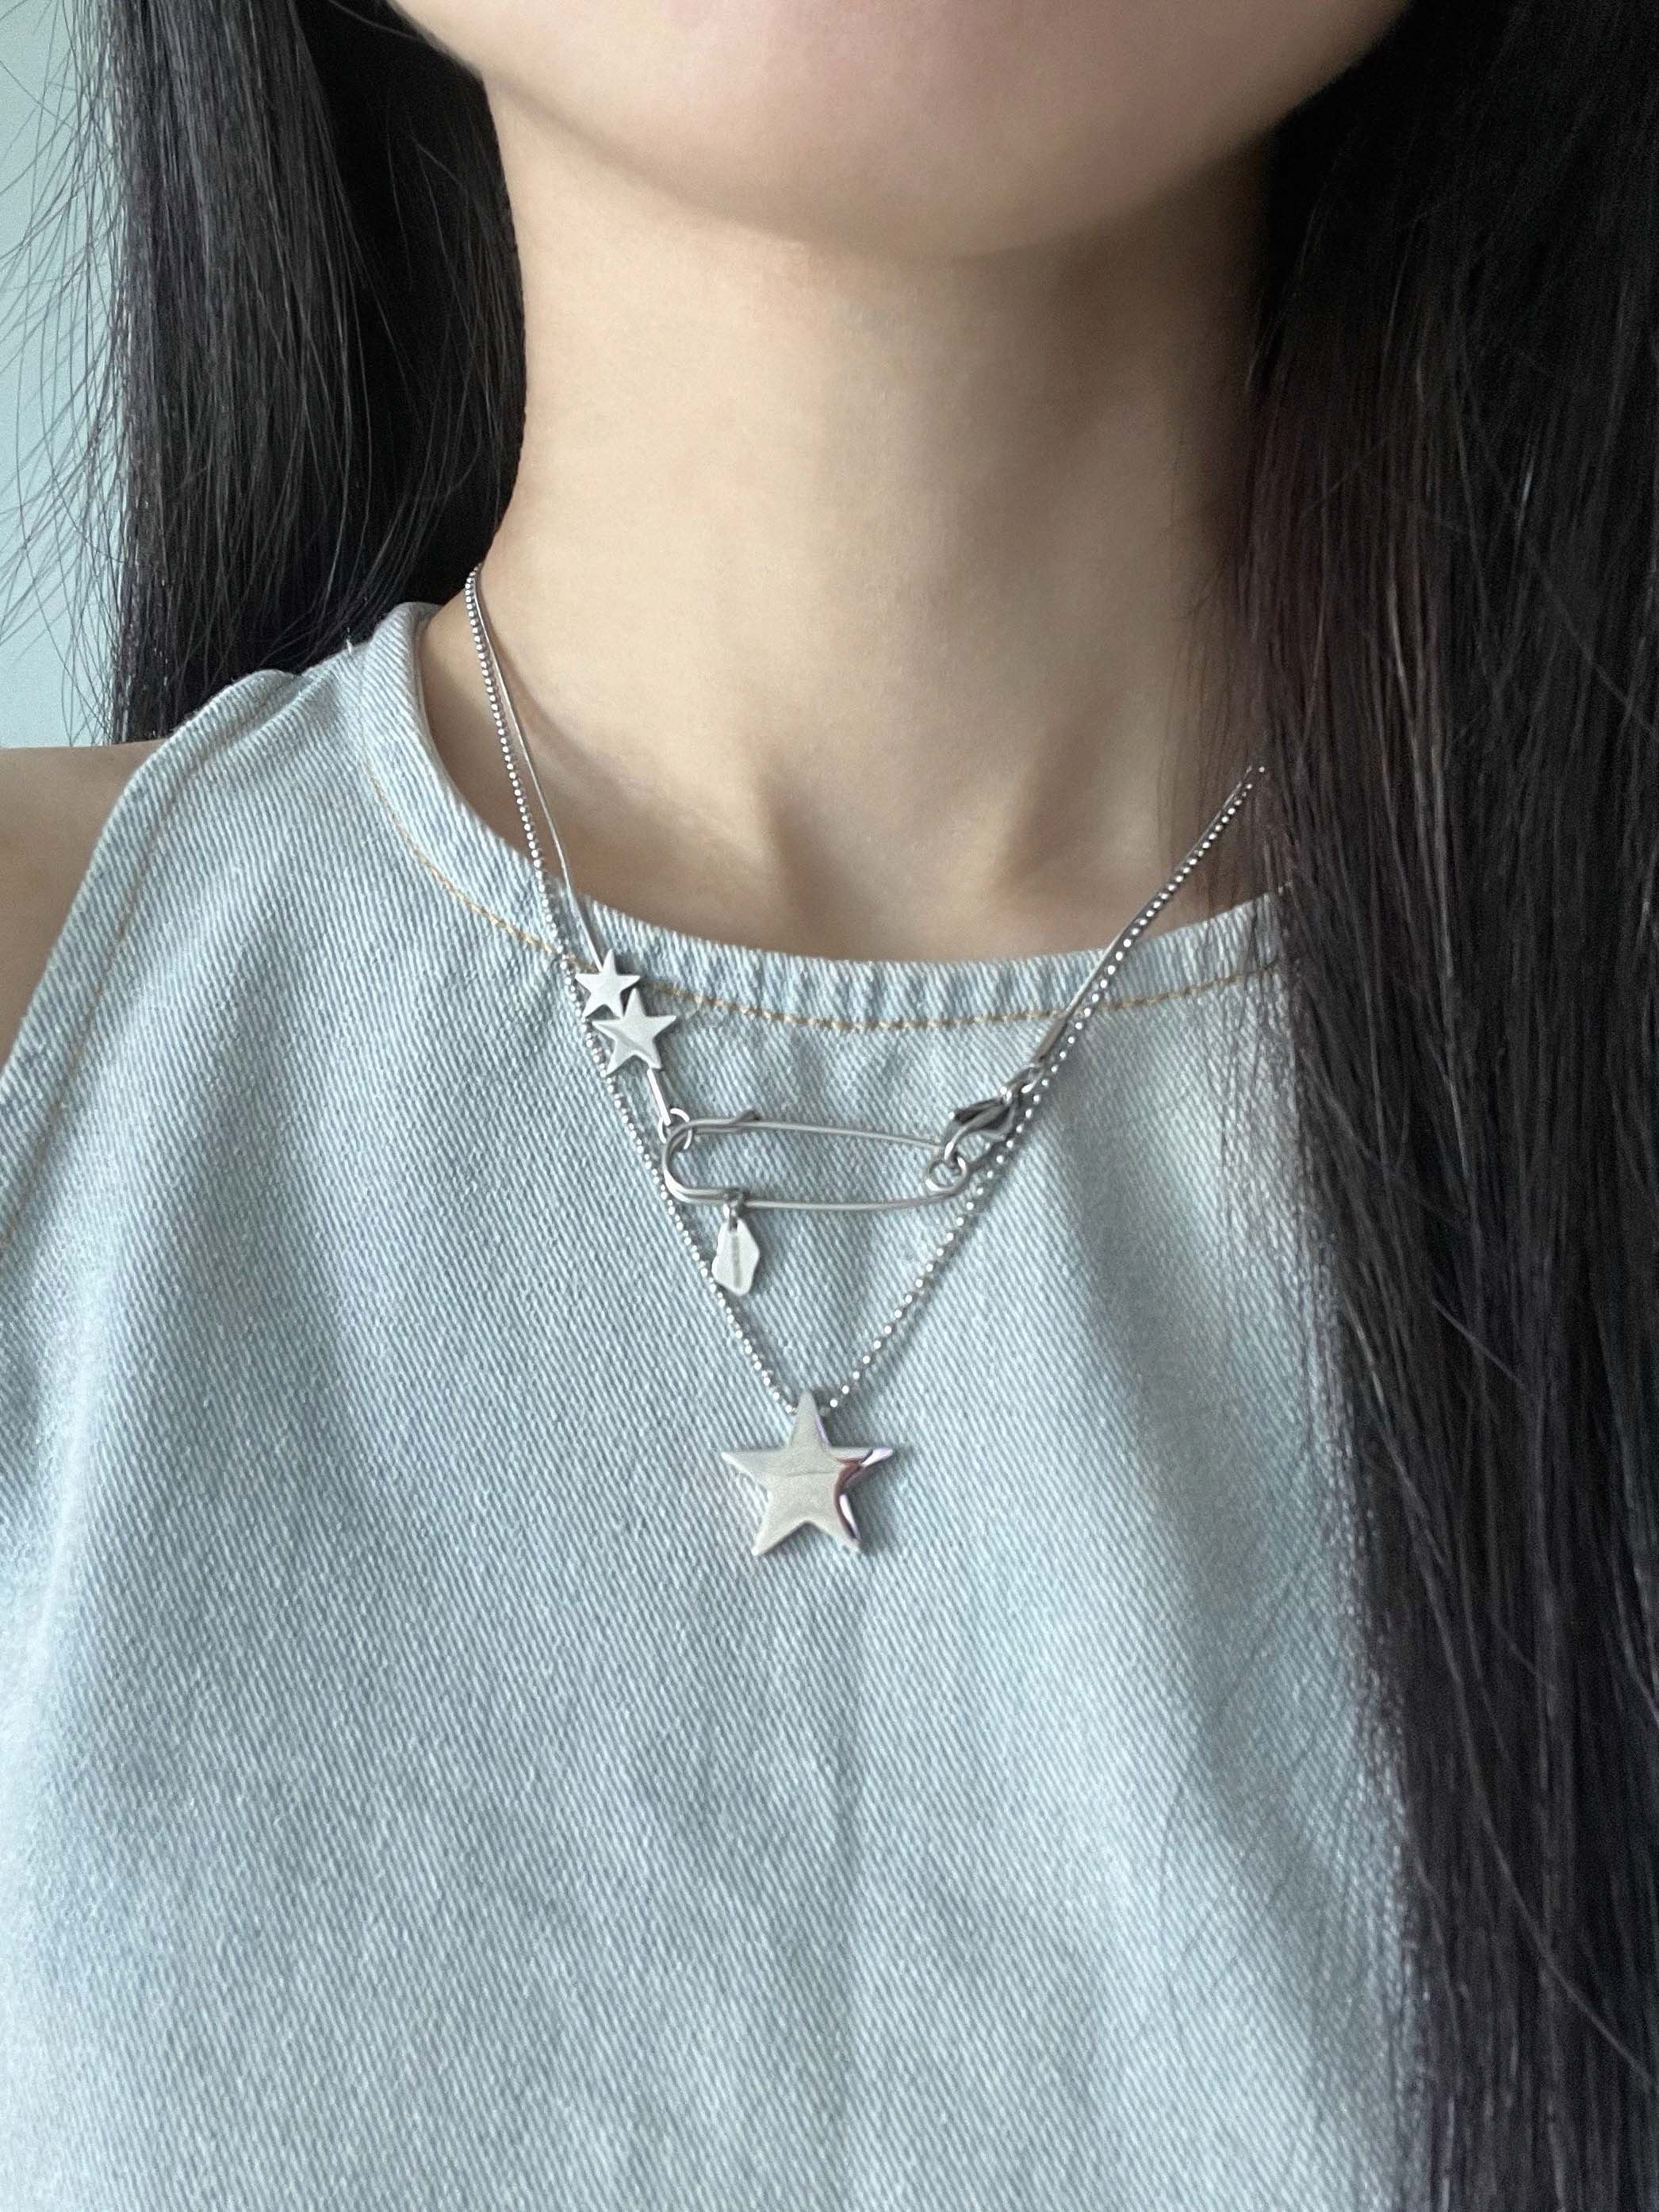 Basic Star Necklace